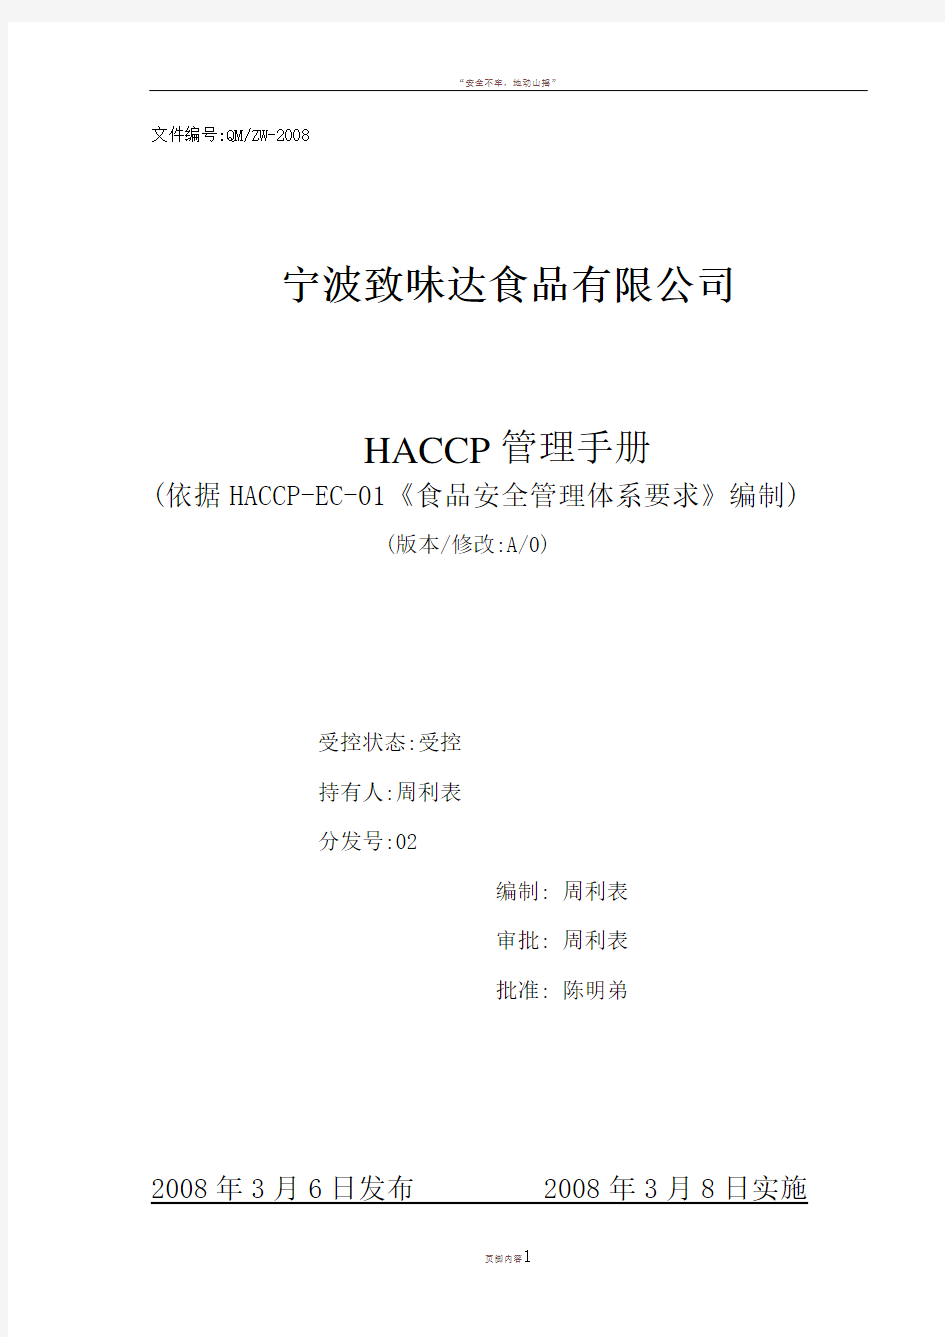 HACCP质量手册